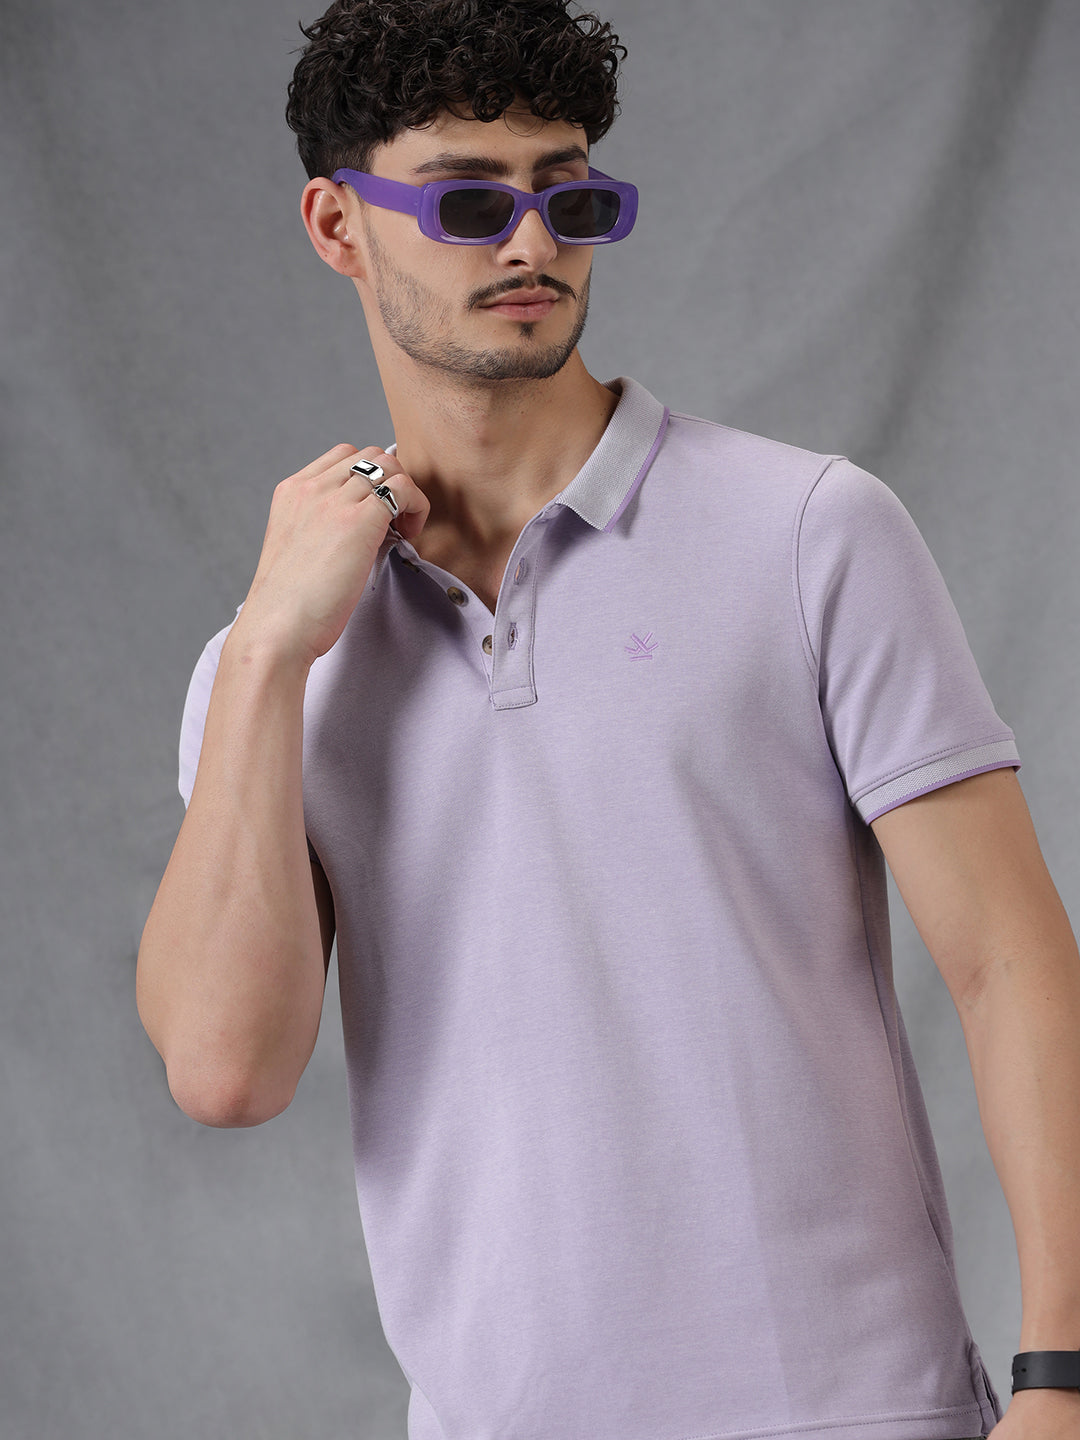 Dual Tone Lavender Polo T-Shirt